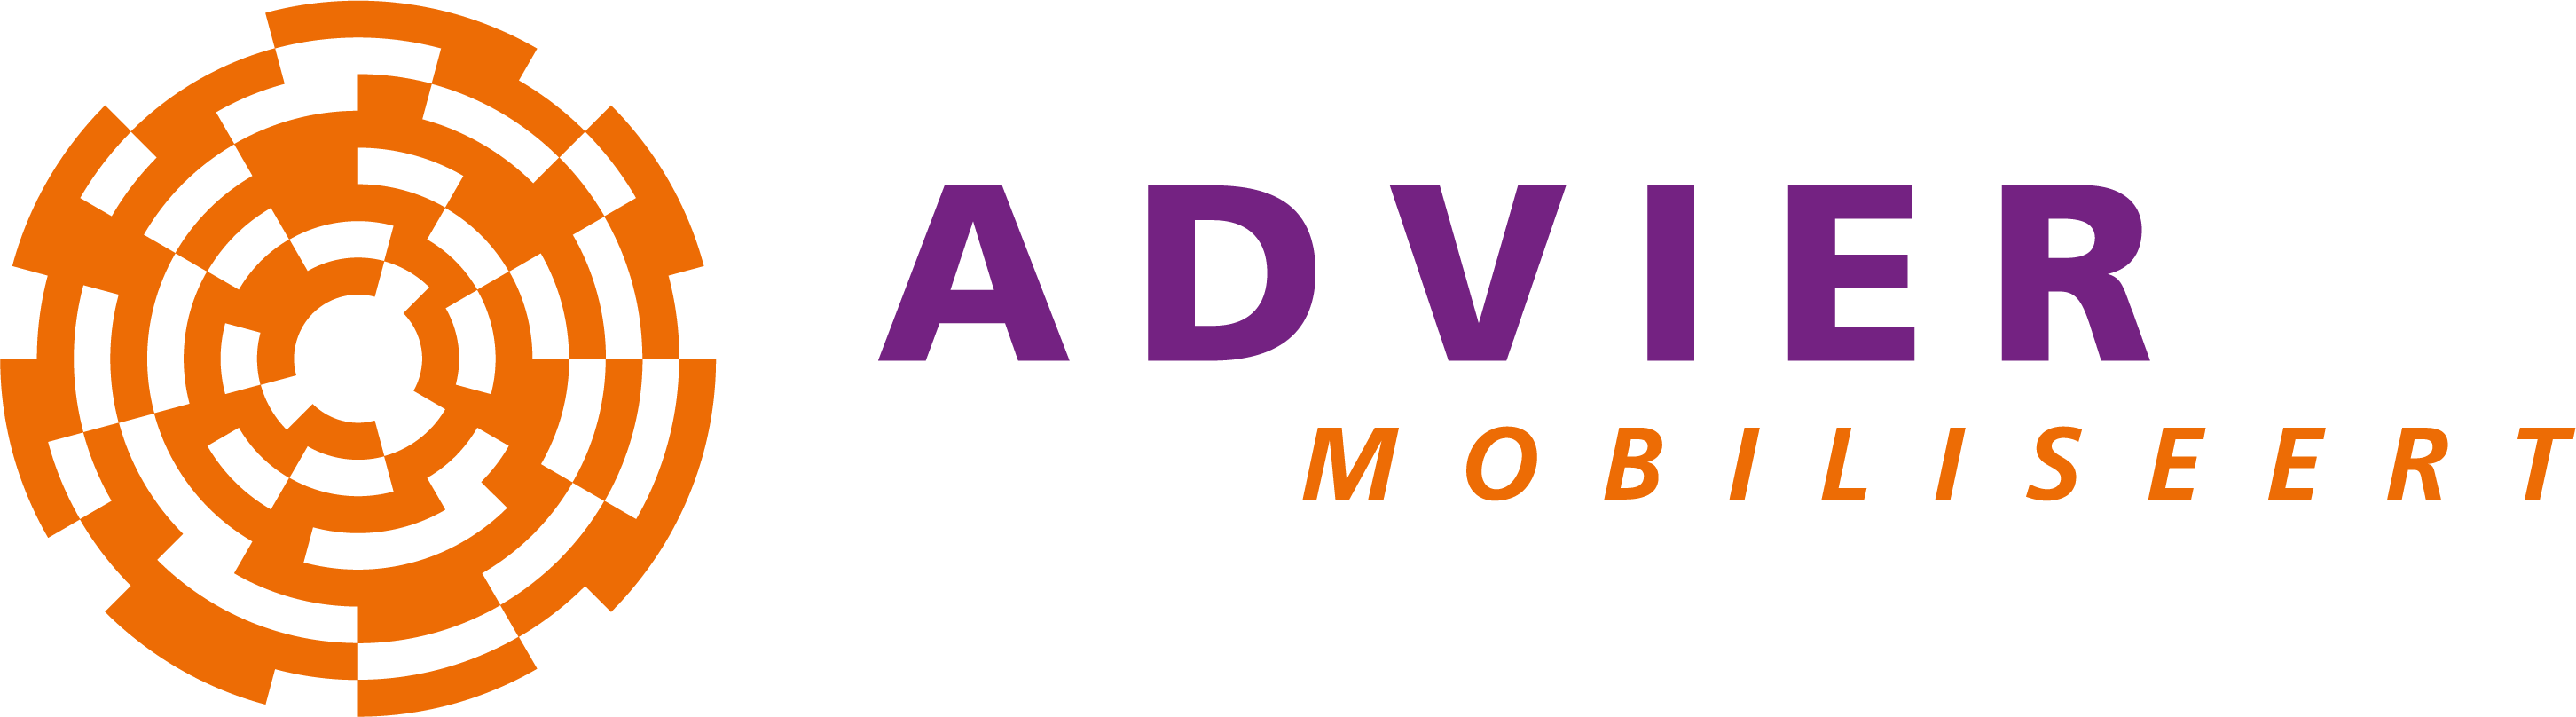 Advier logo